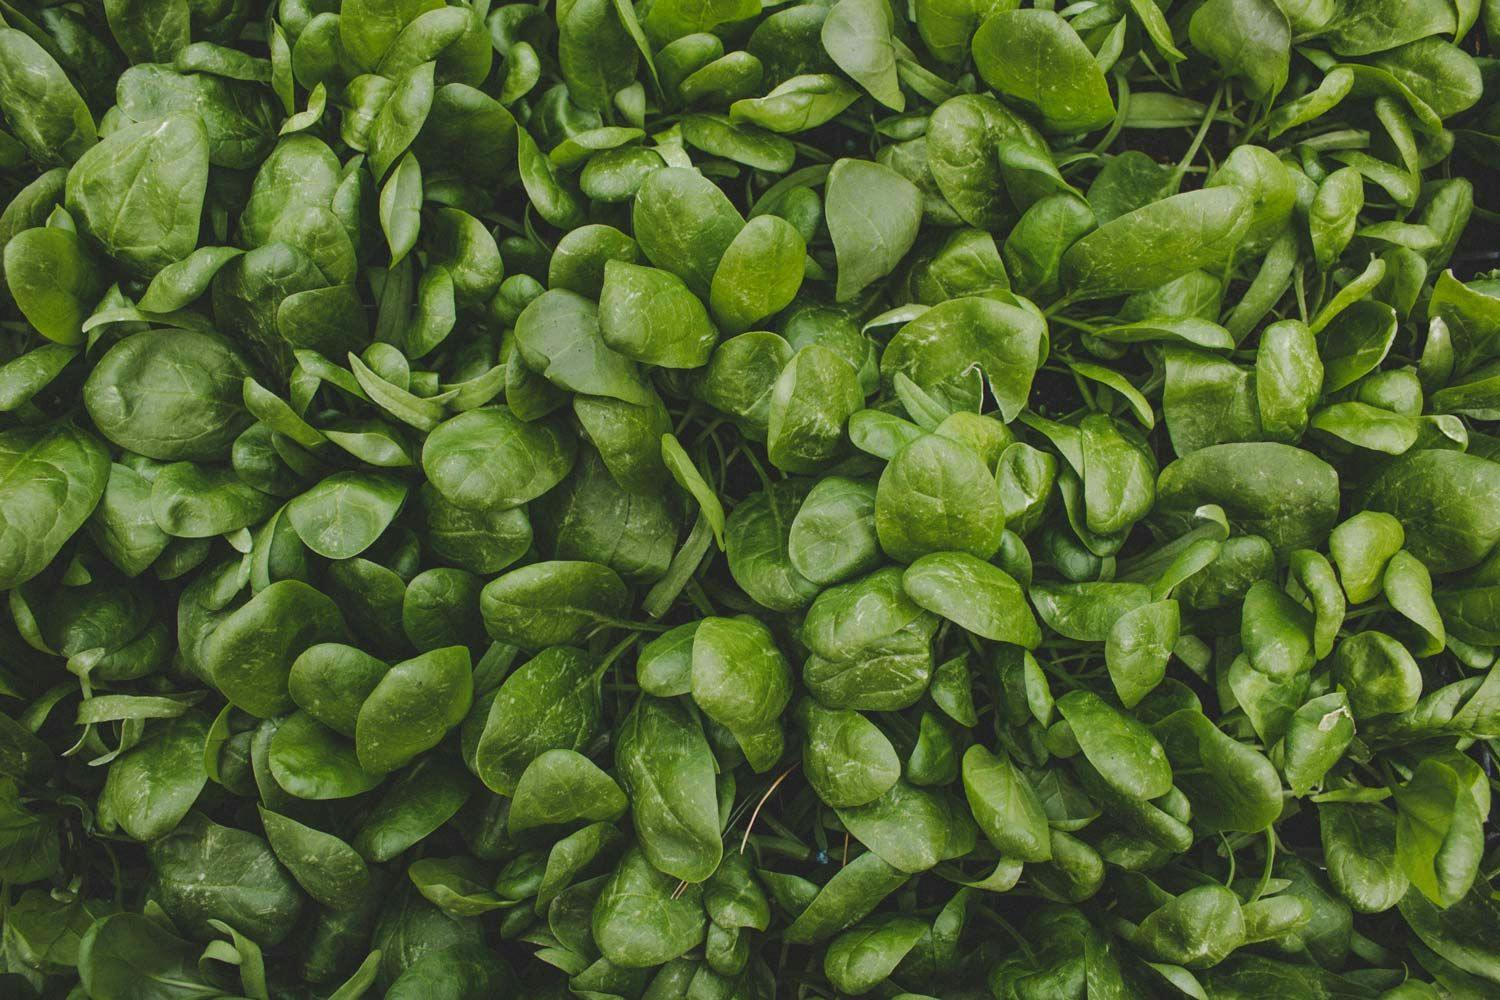 salad greens